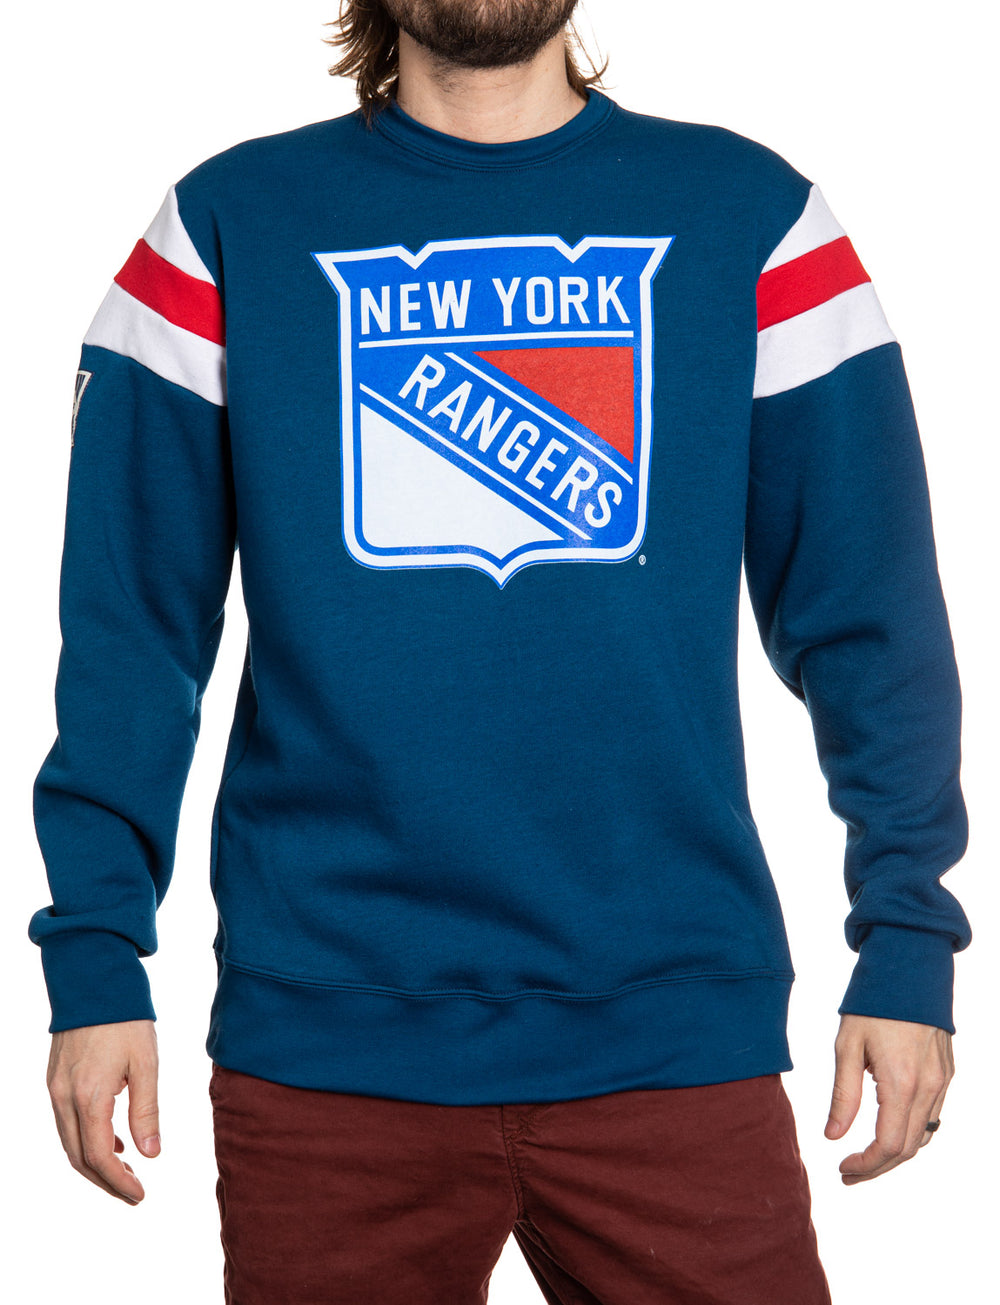 New York Rangers Premium Apparel and Leisurewear